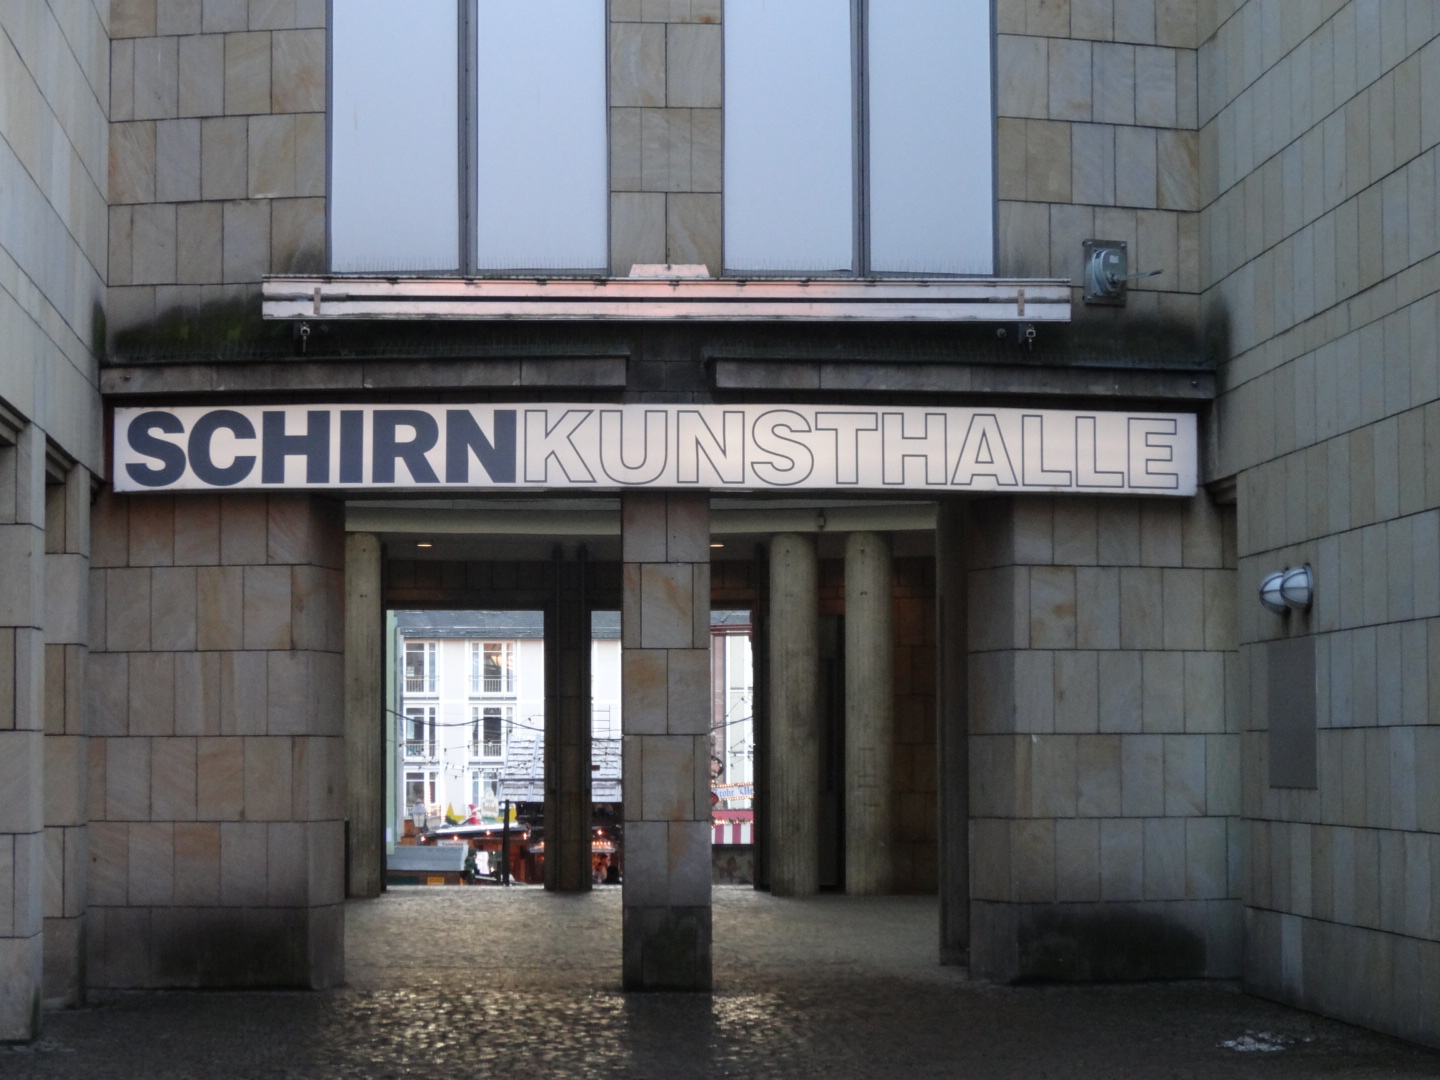 Fotos 360 Schirn Kunsthalle Frankfurt. #VidePan por #Frankfurt